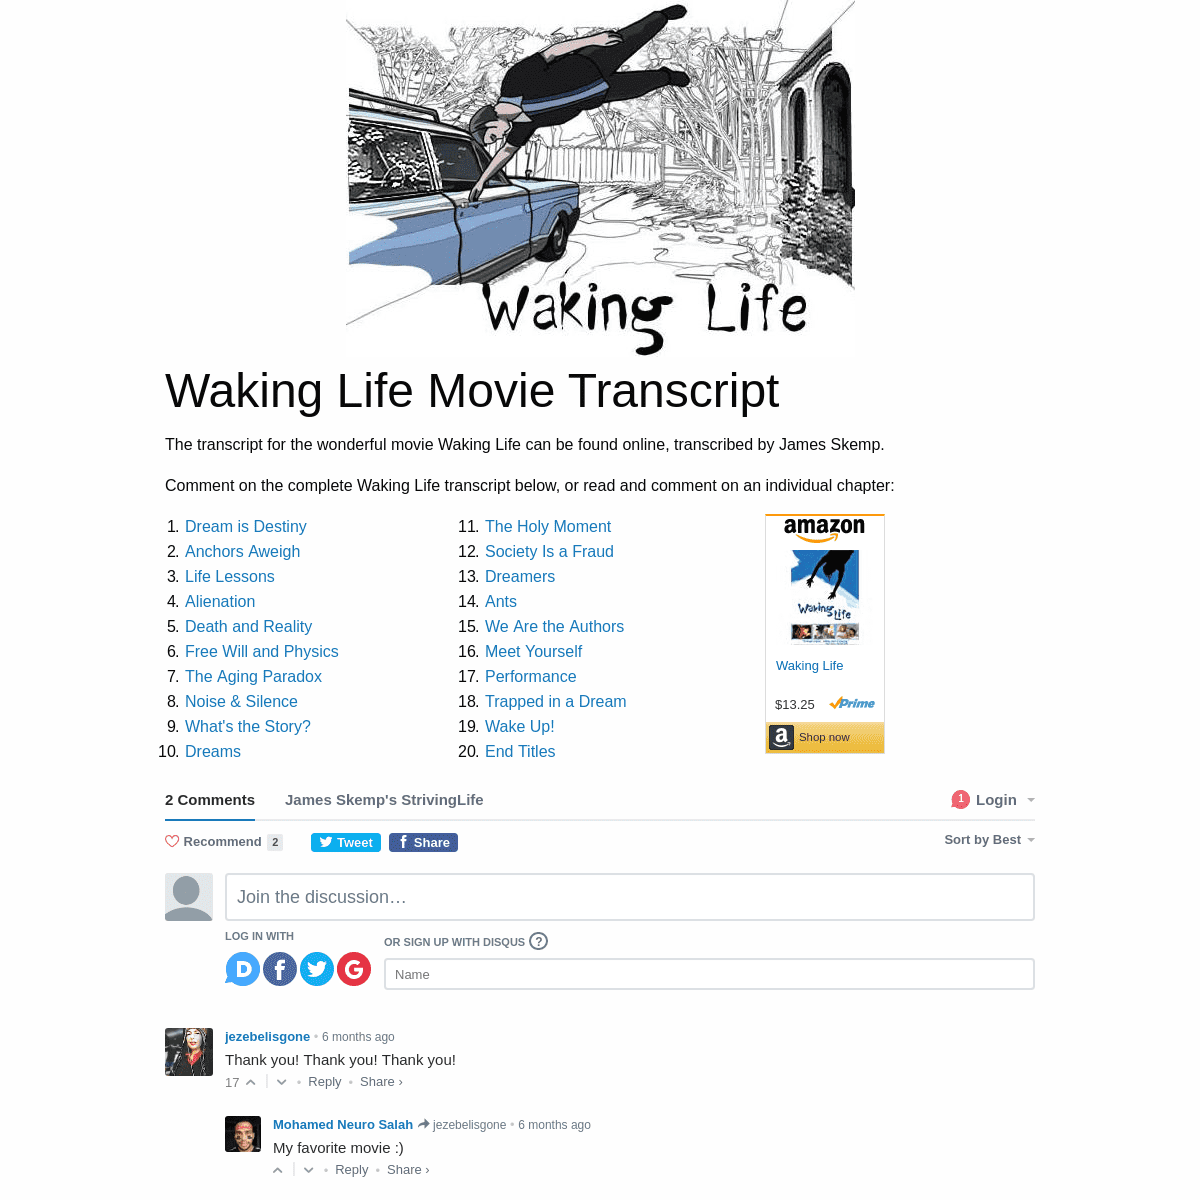 Waking Life Movie Transcript